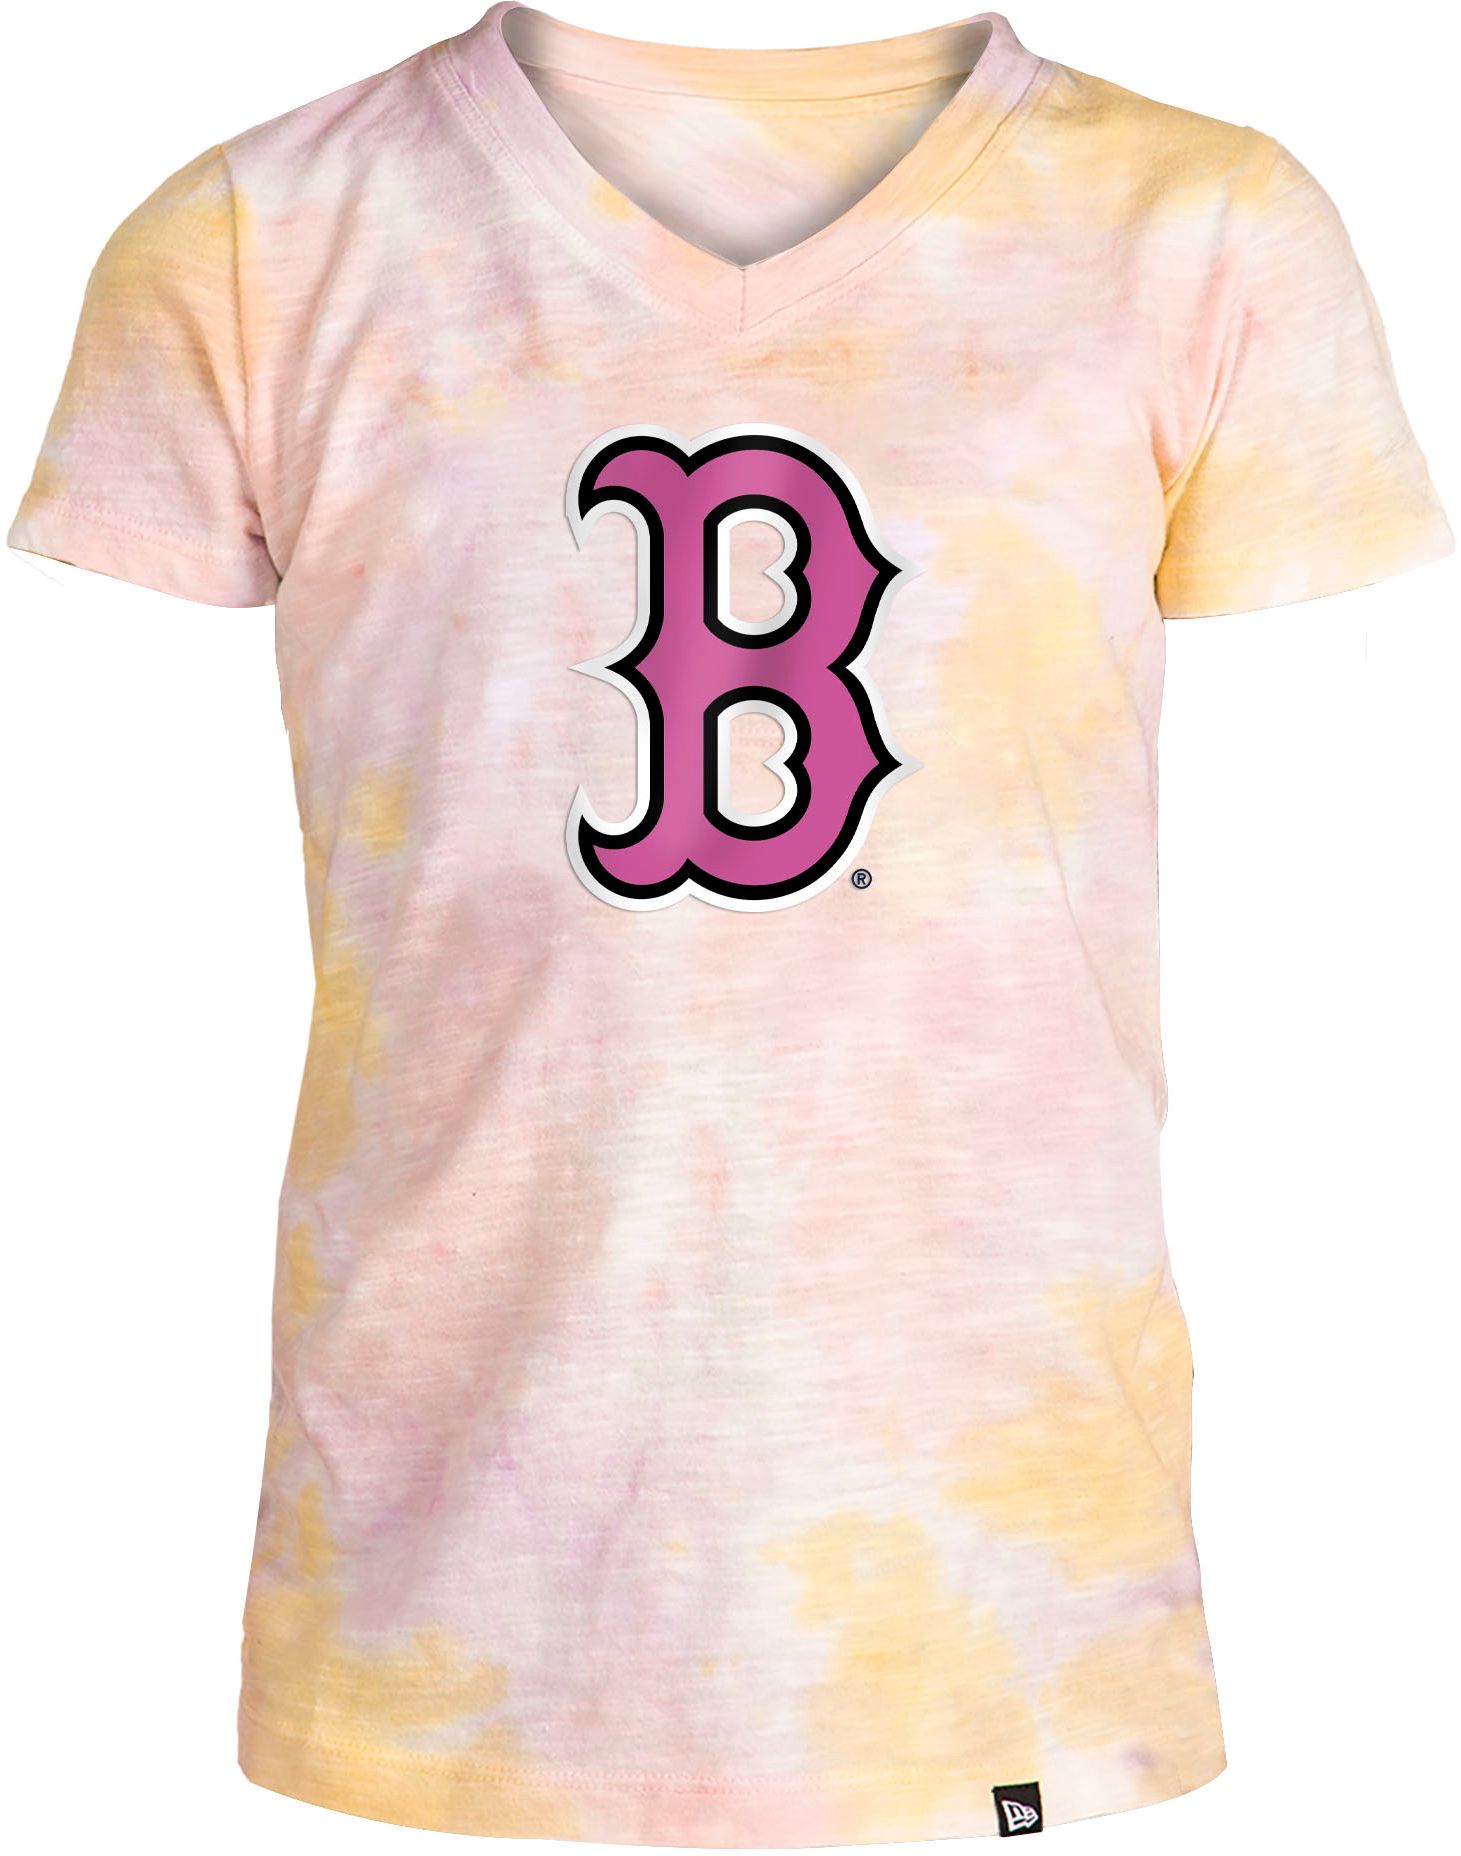 Apparel Girl's Boston Red Sox Tie Dye V-Neck T-Shirt